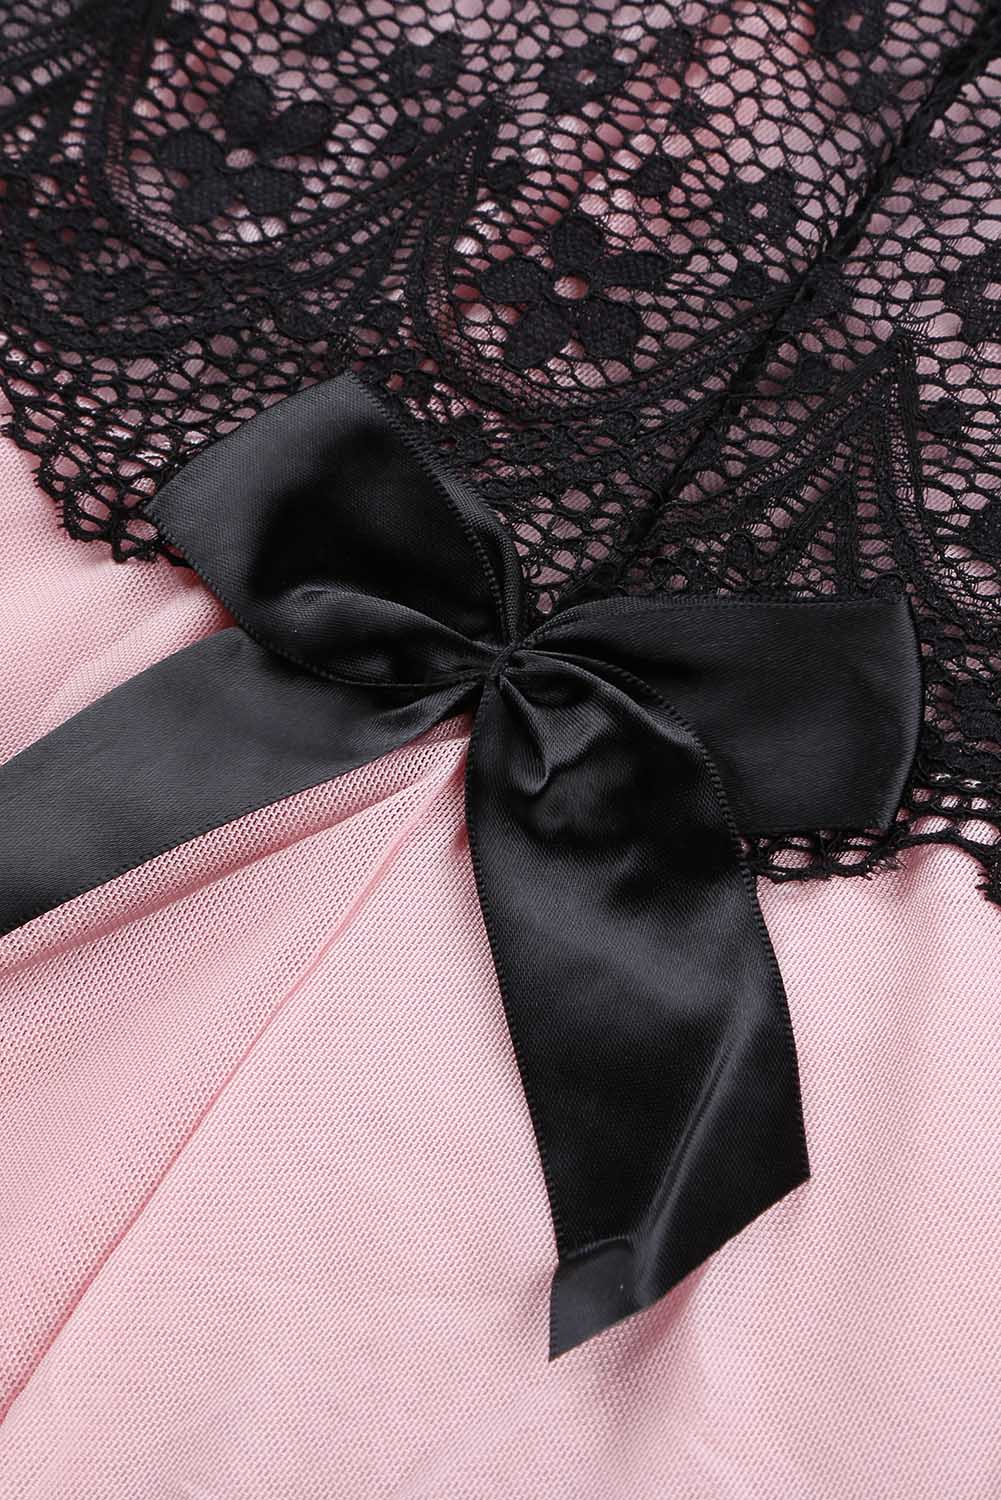 Black Lace and Pink Babydoll Nightdress – ModeShe.com